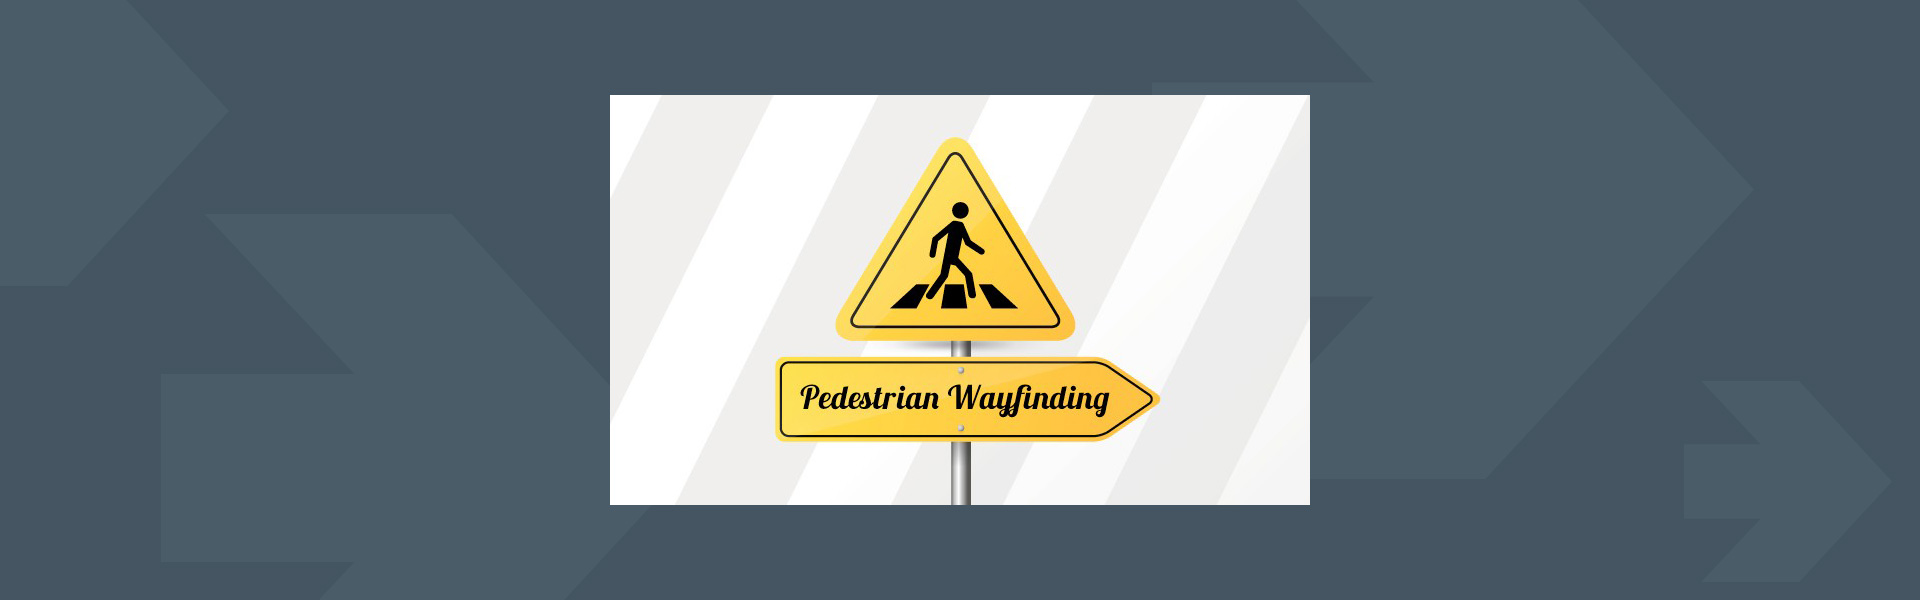 Pedestrian Wayfinding Signage